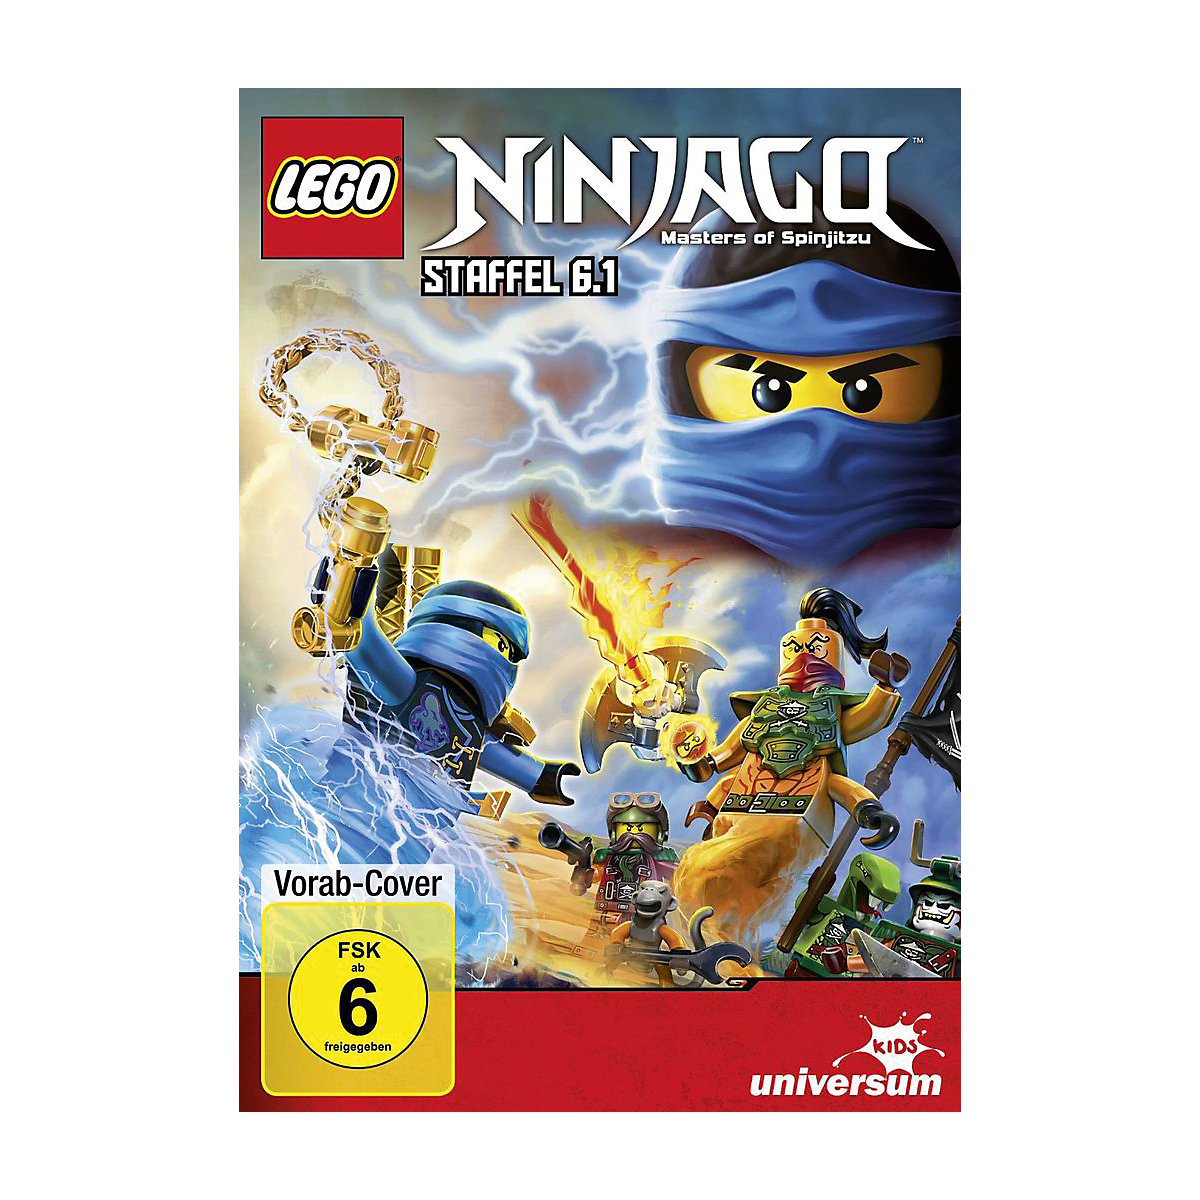 DVD LEGO Ninjago Season 6.1